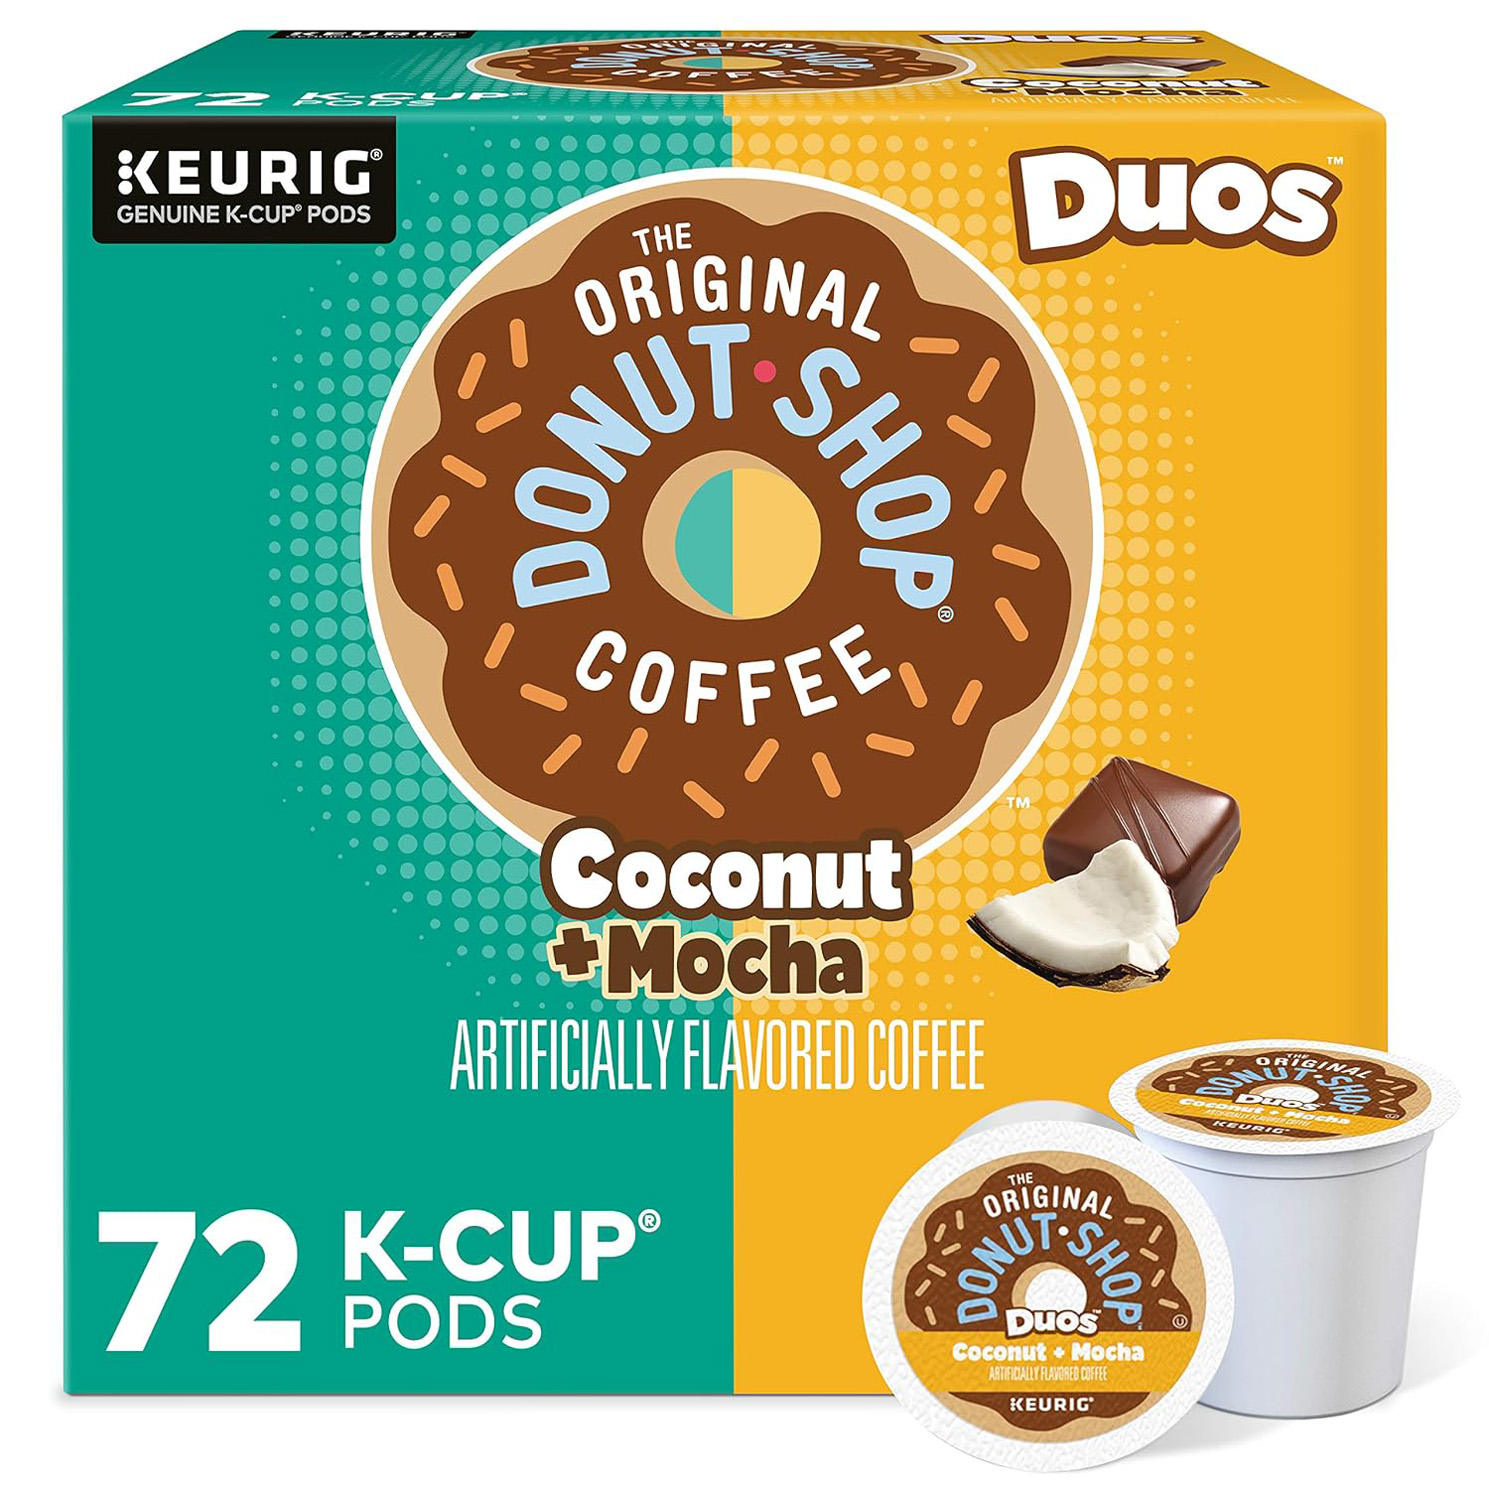 The Original Donut Shop Duos Coconut + Mocha Keurig Single-Serve K-Cup Pods, Medium Roast Coffee